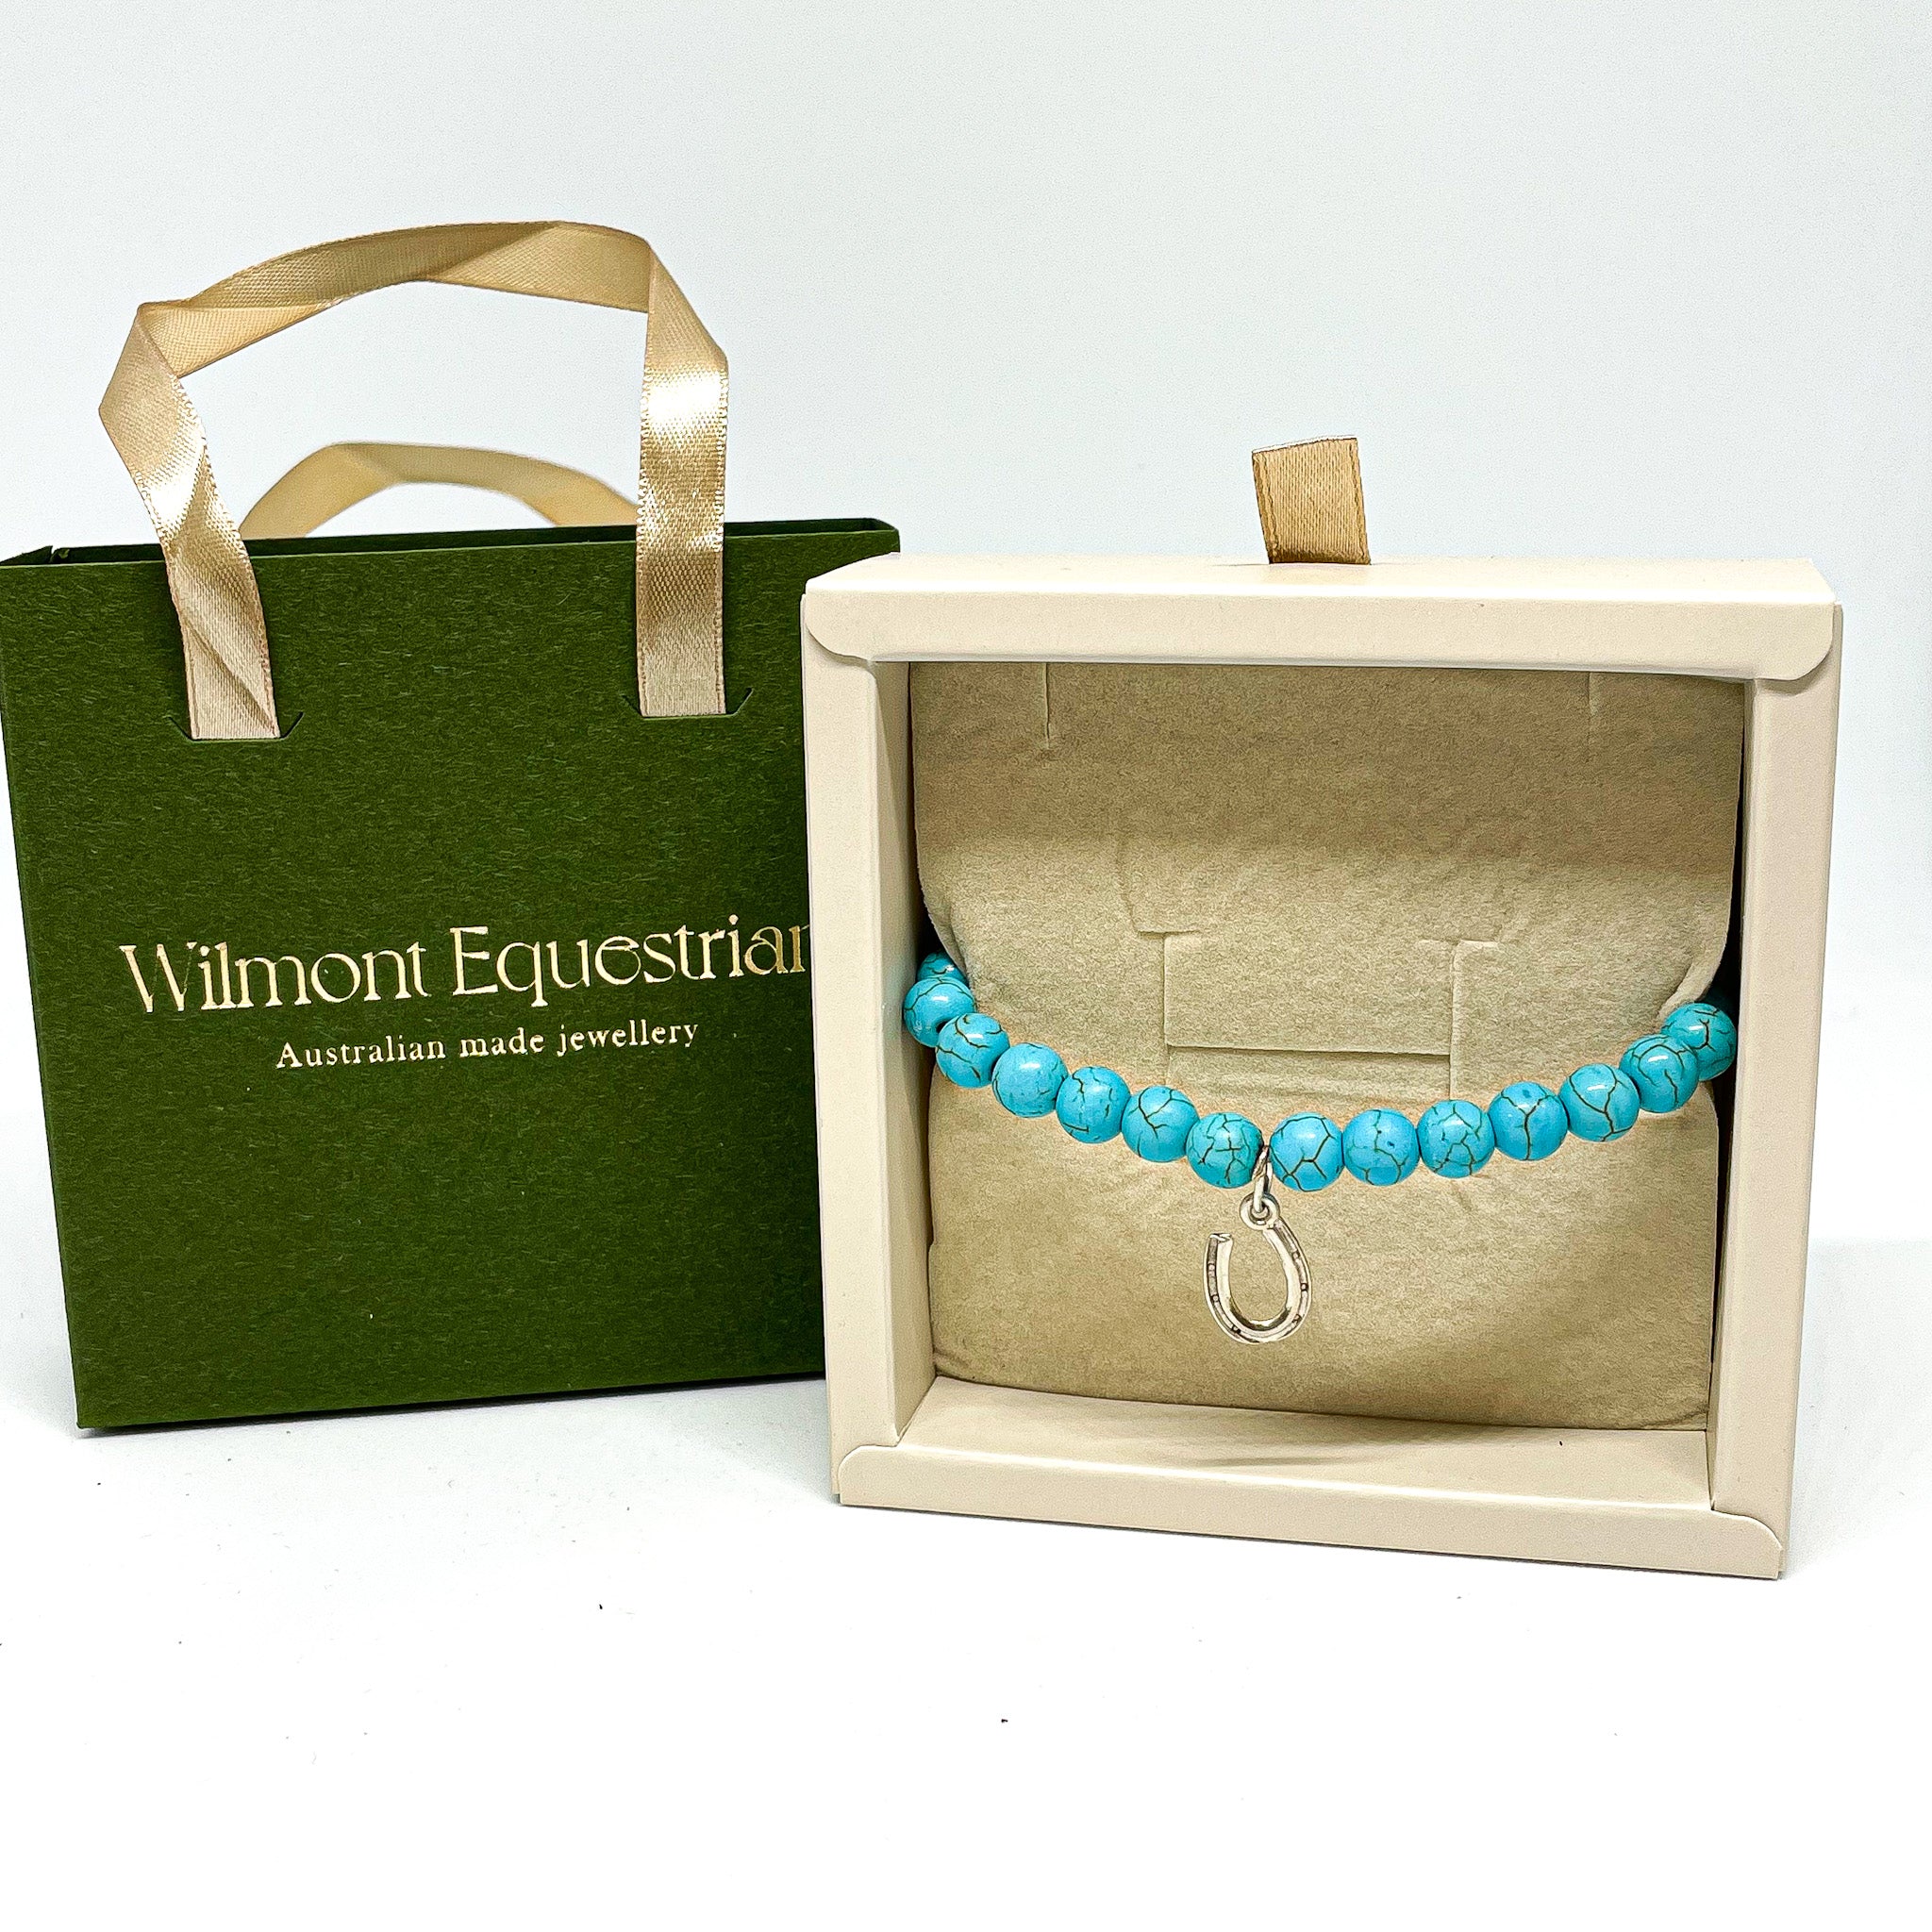 Turquoise 8mm bead bracelet